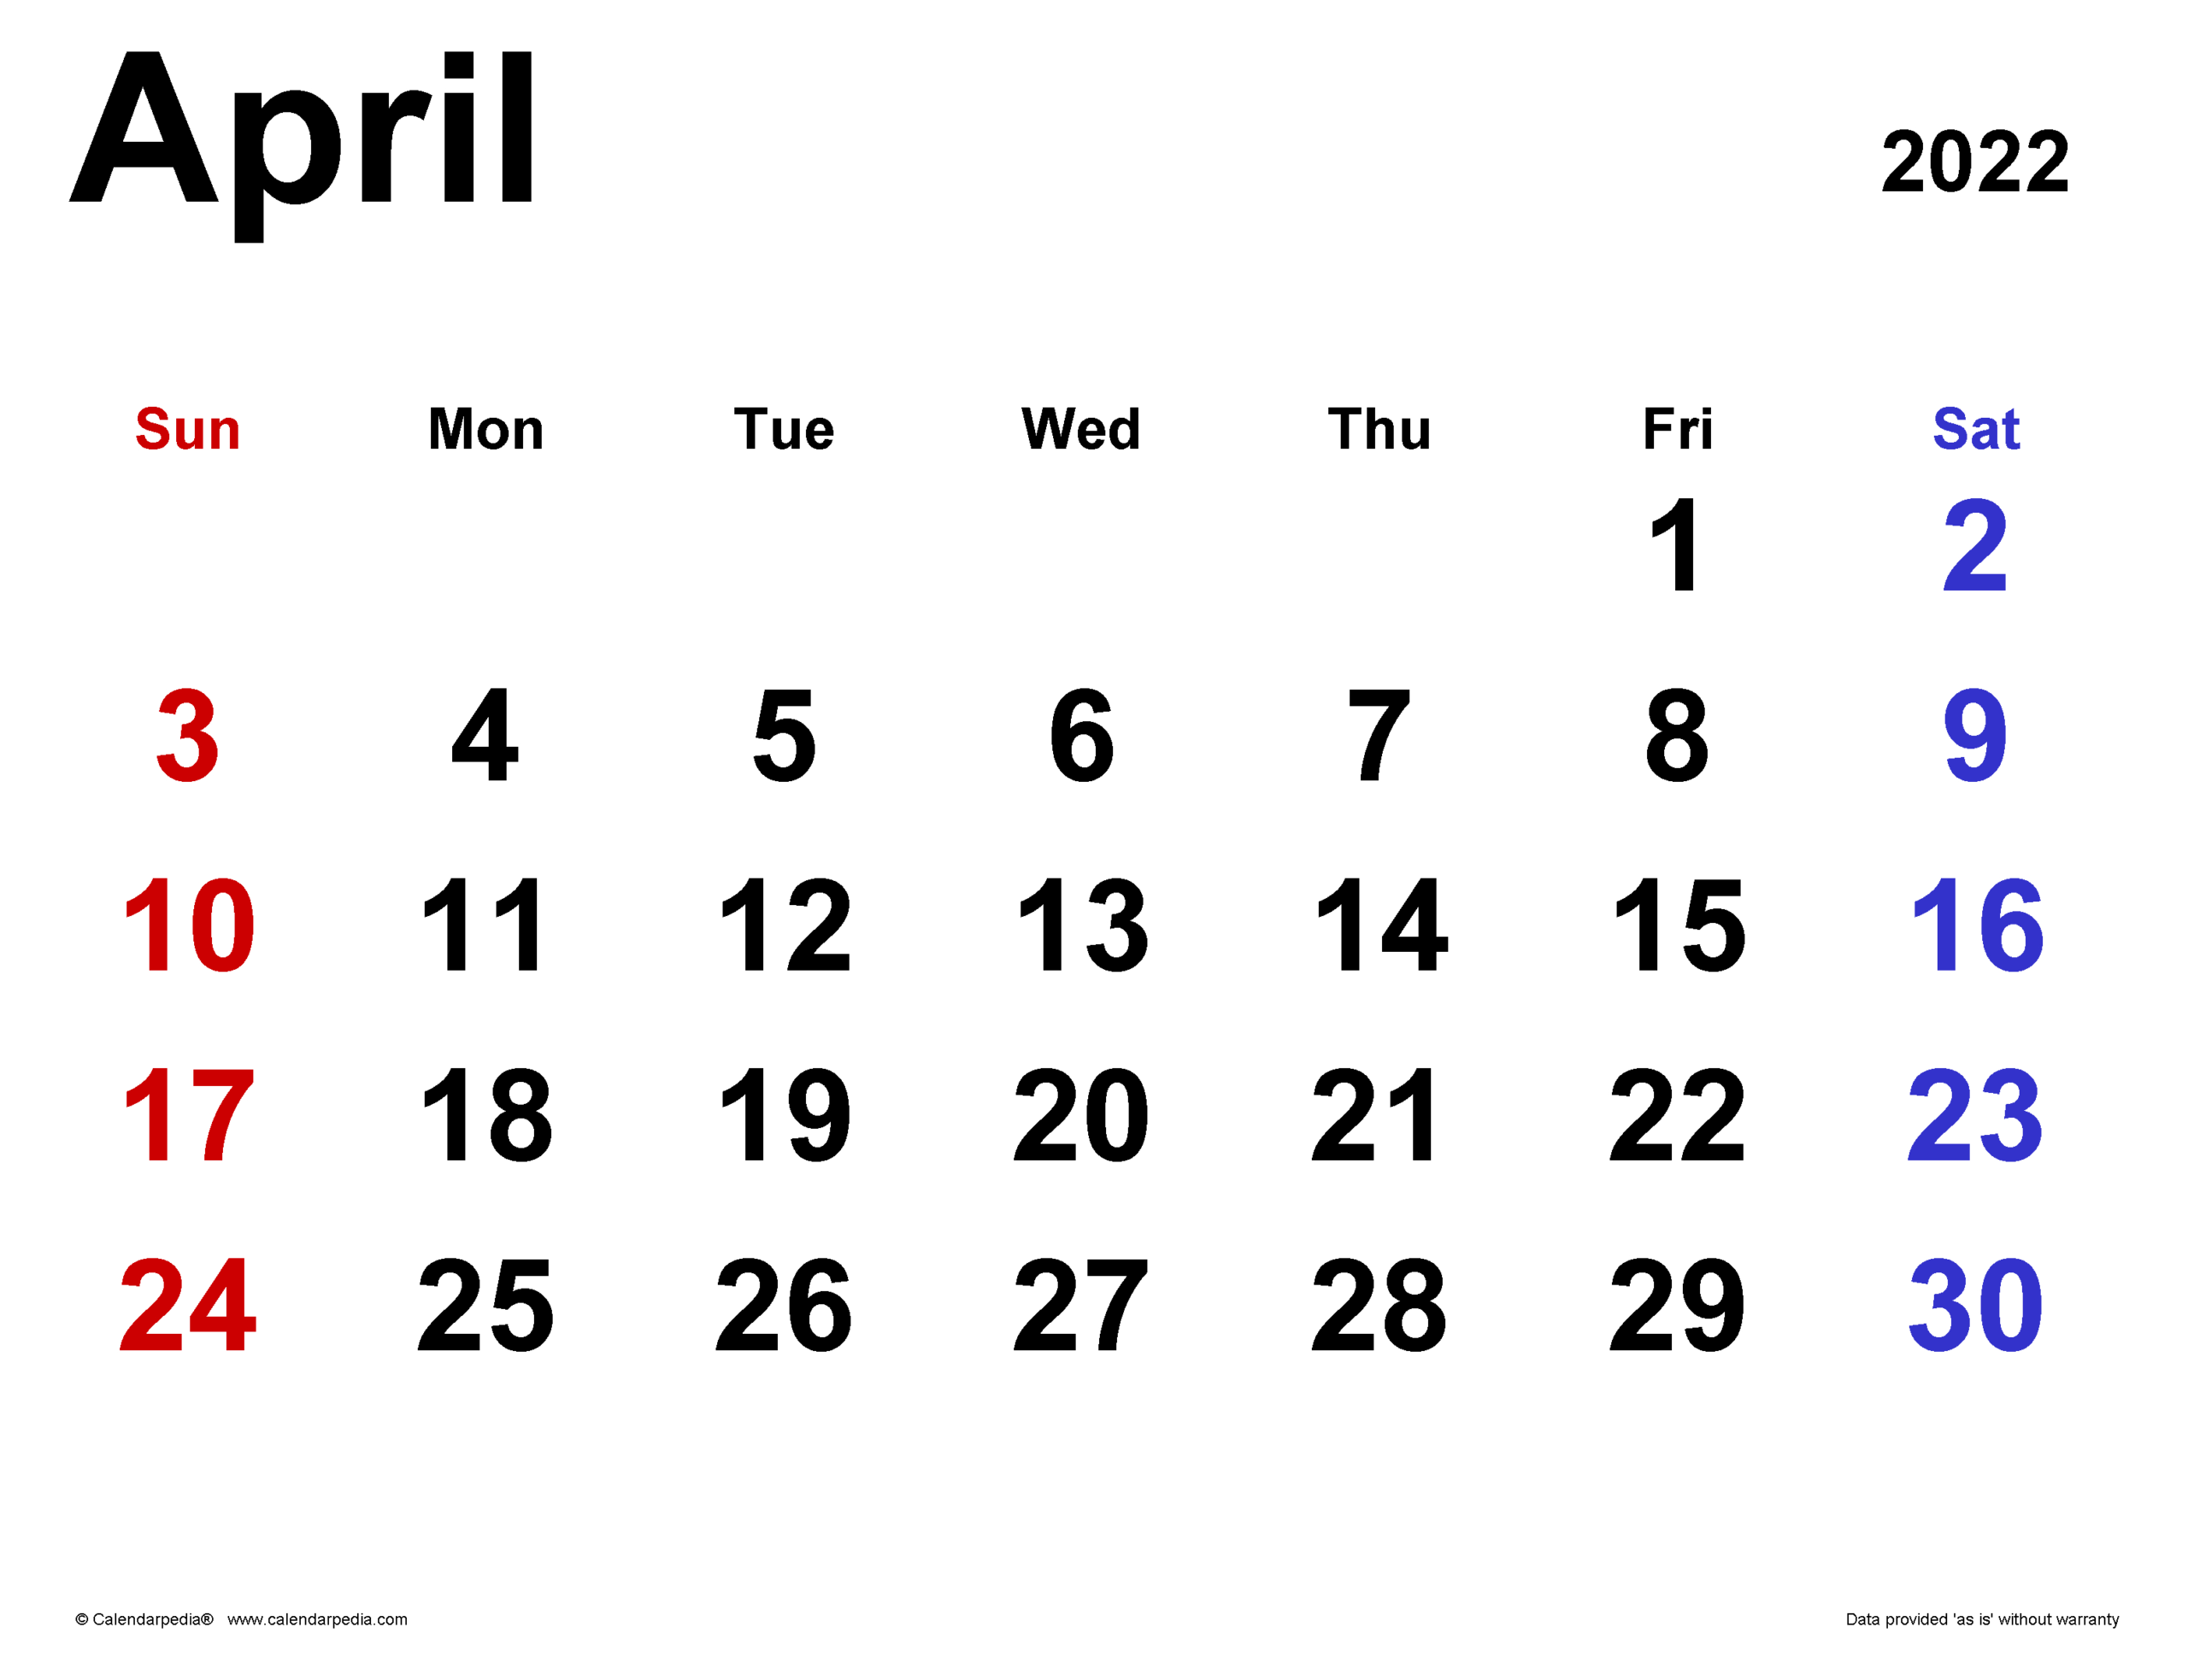 April 2022 Calendar Waterproof - March 2022 Calendar